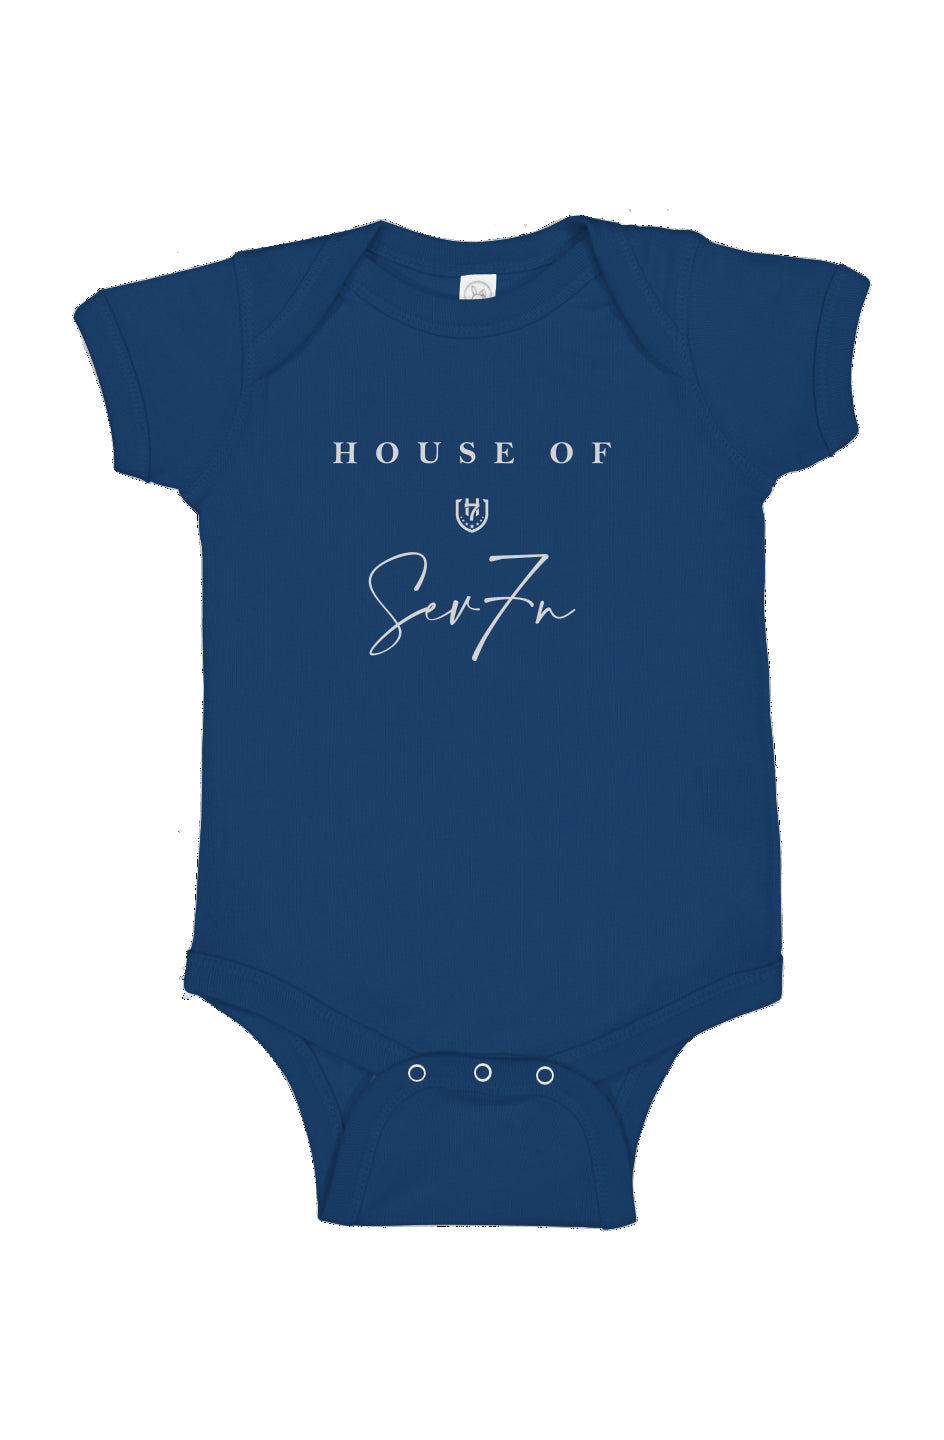 H7 Royal Blue/White Infant Fine Jersey Bodysuit